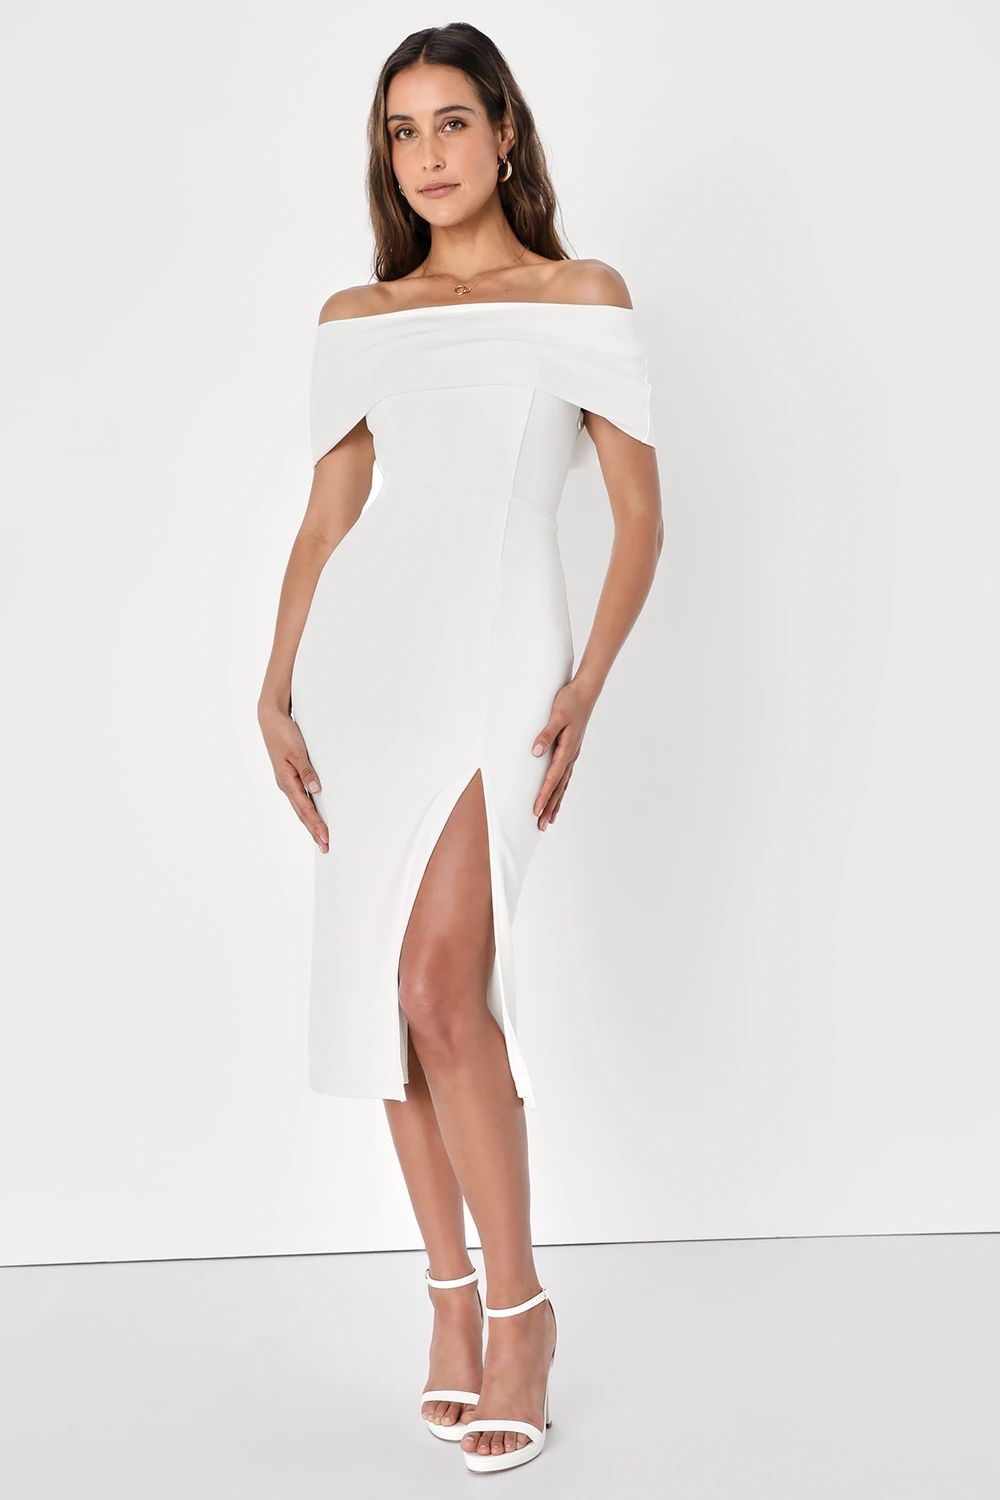 Luxe Attitude White Off-the-Shoulder Bodycon Midi Dress | Lulus (US)